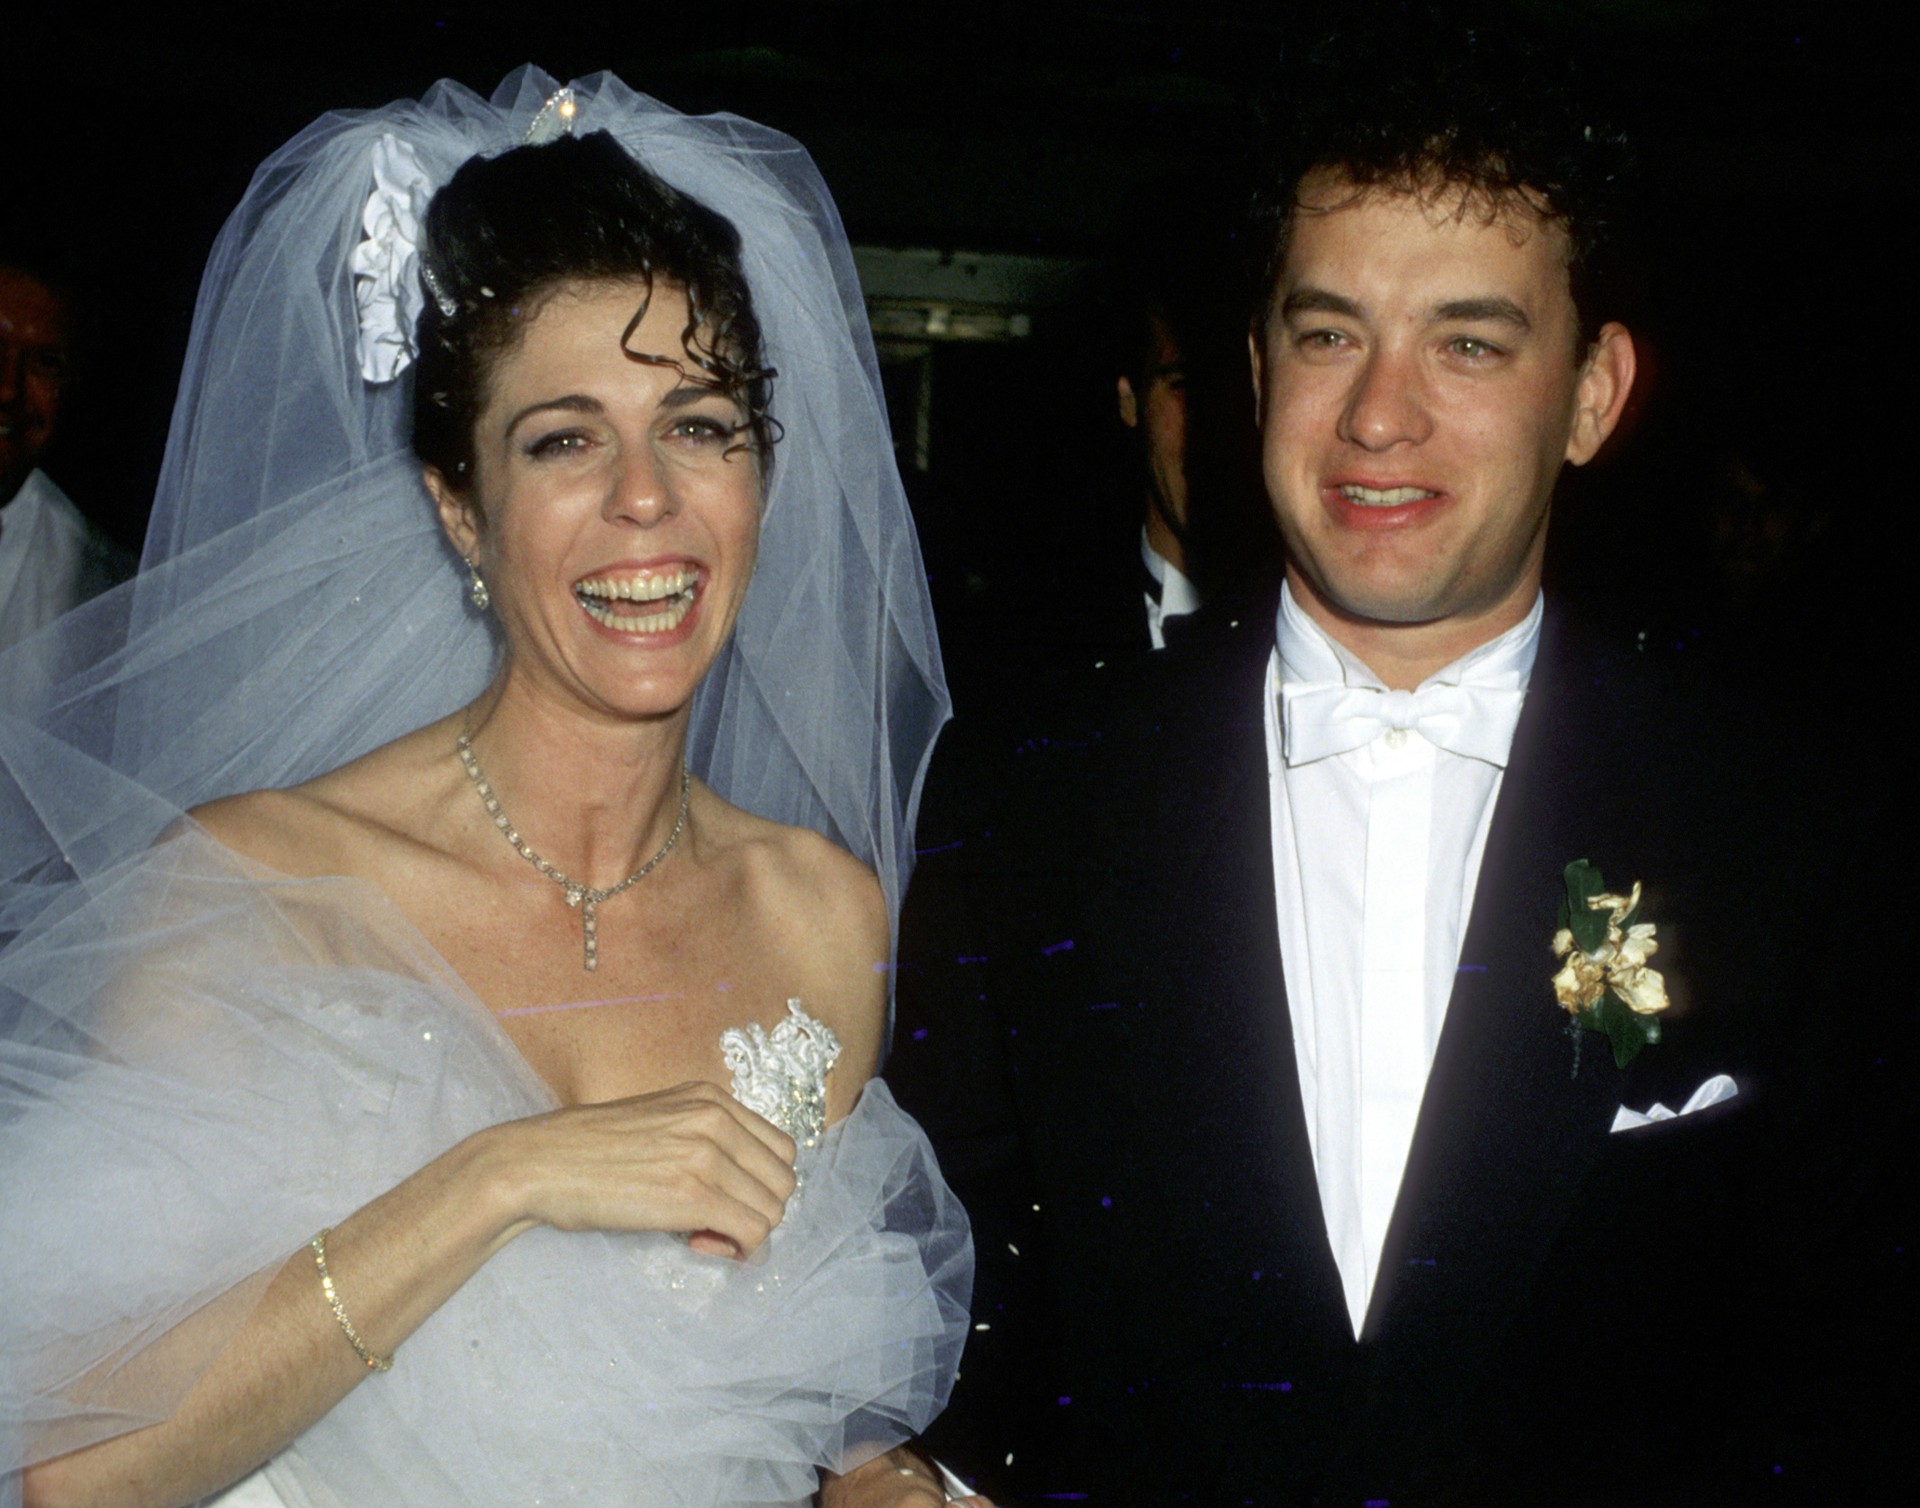 Tom Hanks e Rita Wilson, casados desde abril de 1988. (Foto: Getty Images)